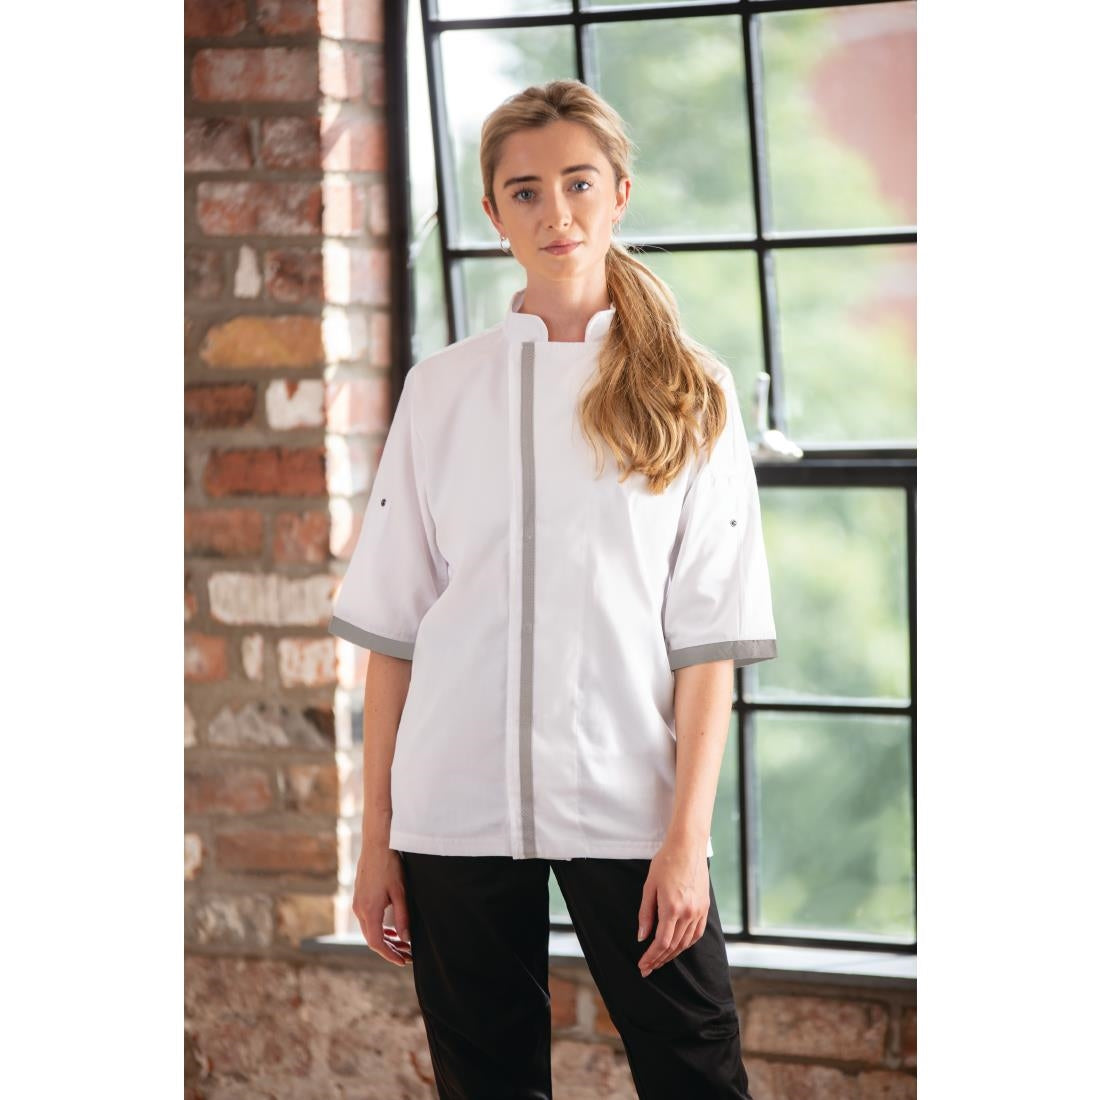 B998-M Southside Unisex Chefs Jacket Short Sleeve White M JD Catering Equipment Solutions Ltd